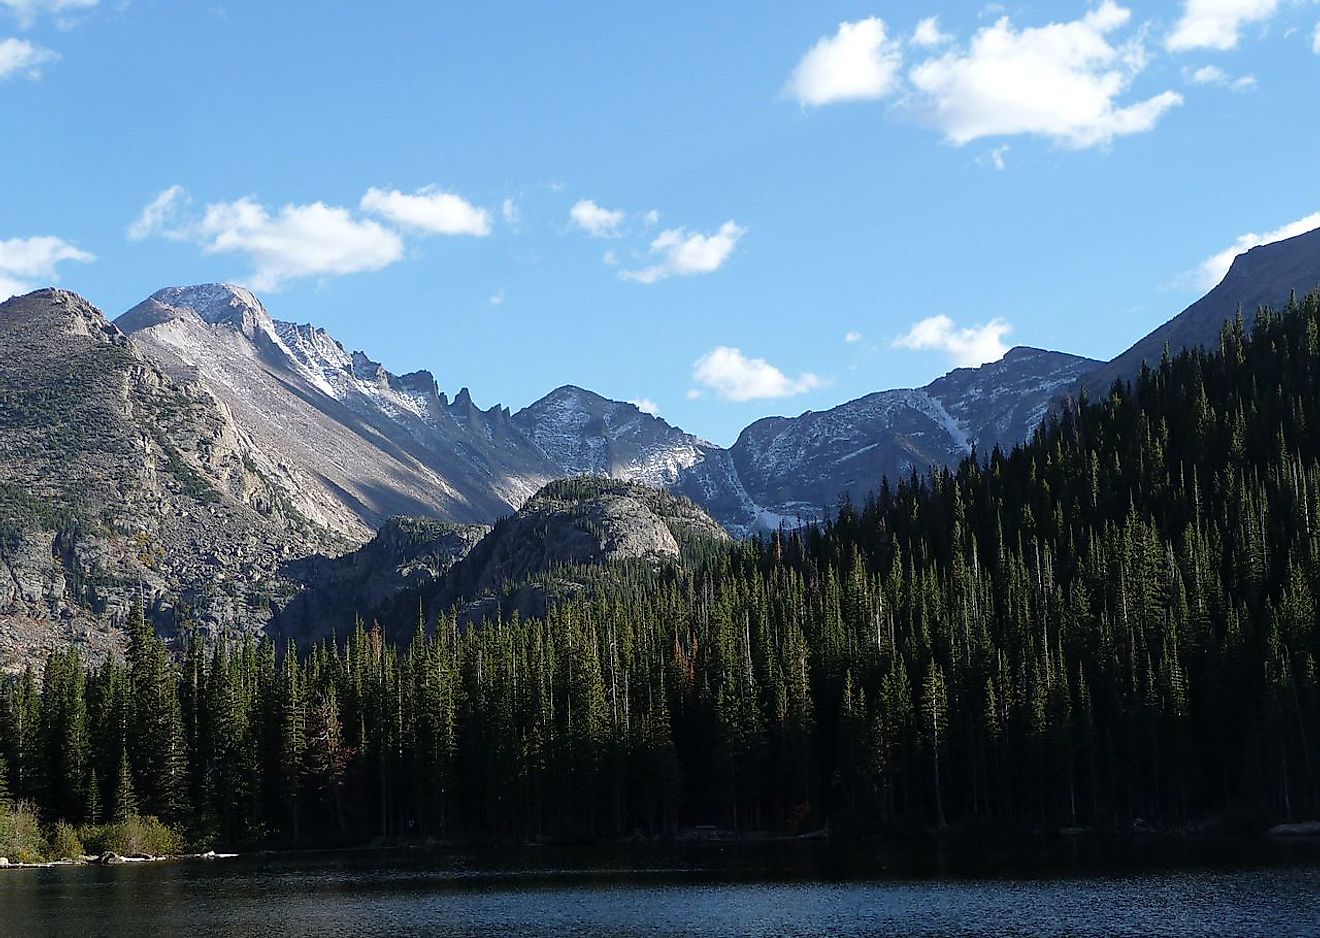 Rocky Mountain National Park. Image credit: Daniel Mayer/Wikimedia.org